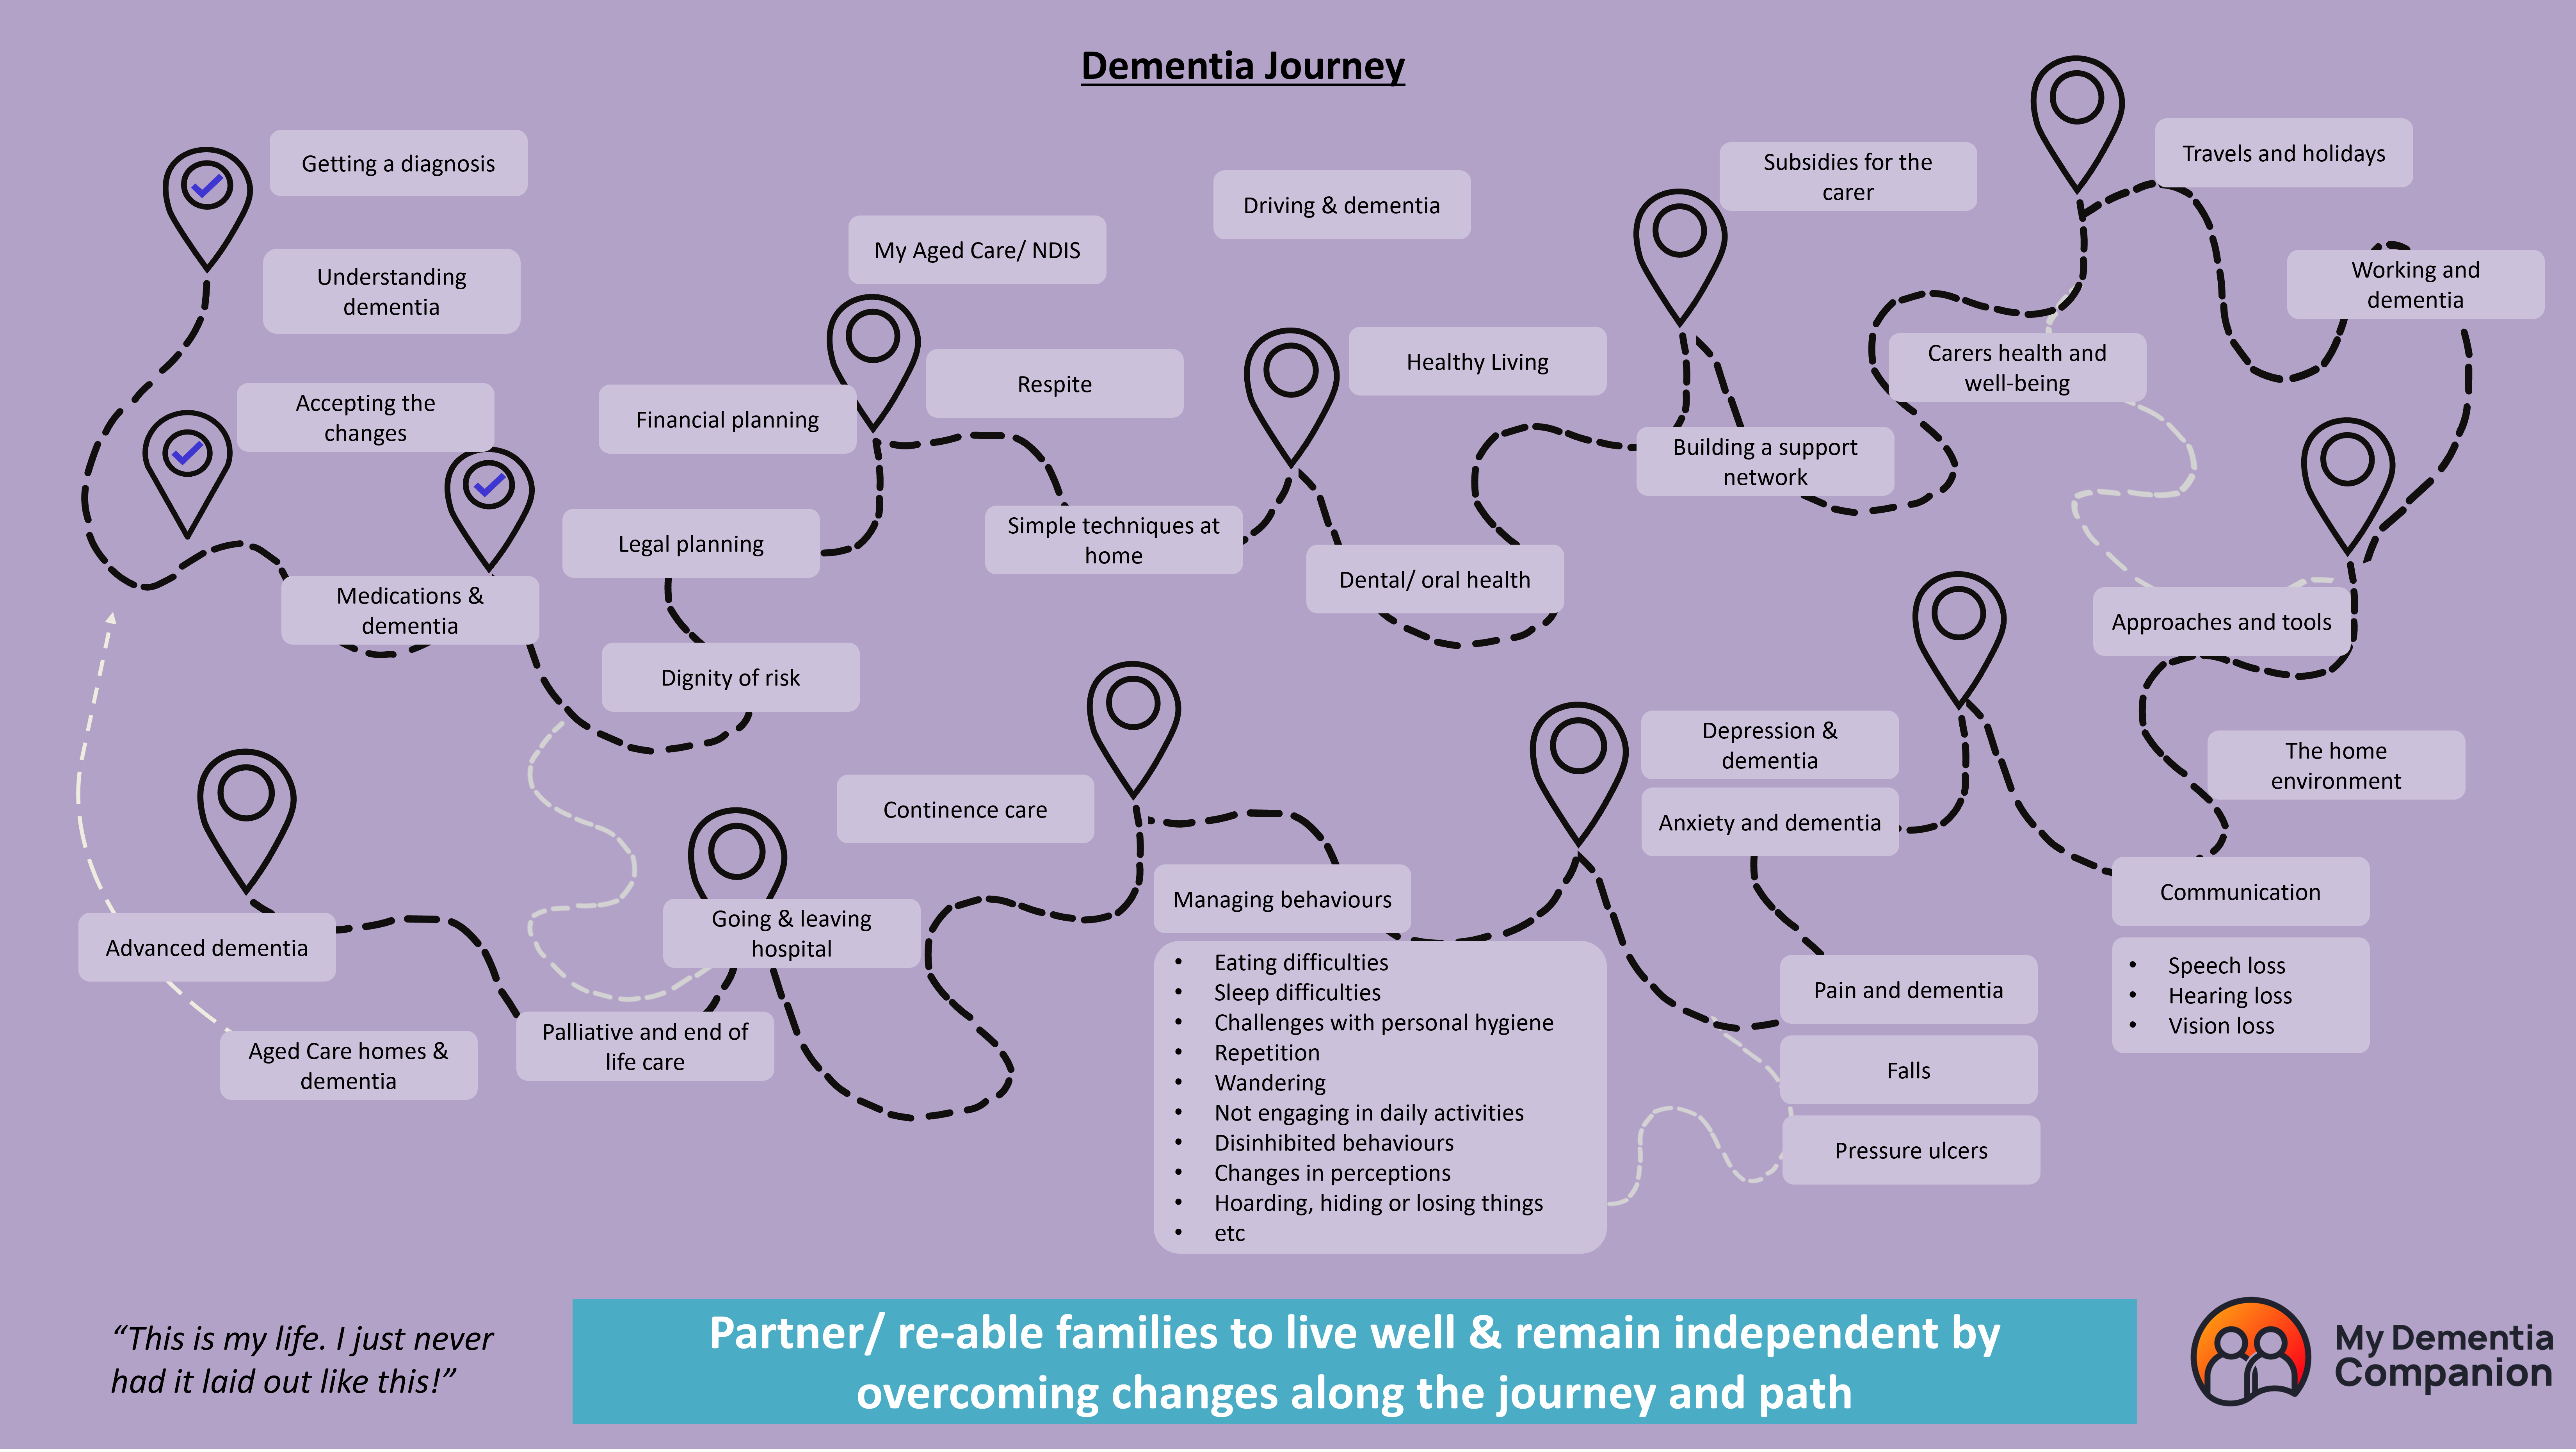 My Dementia Companion Dementia Journey